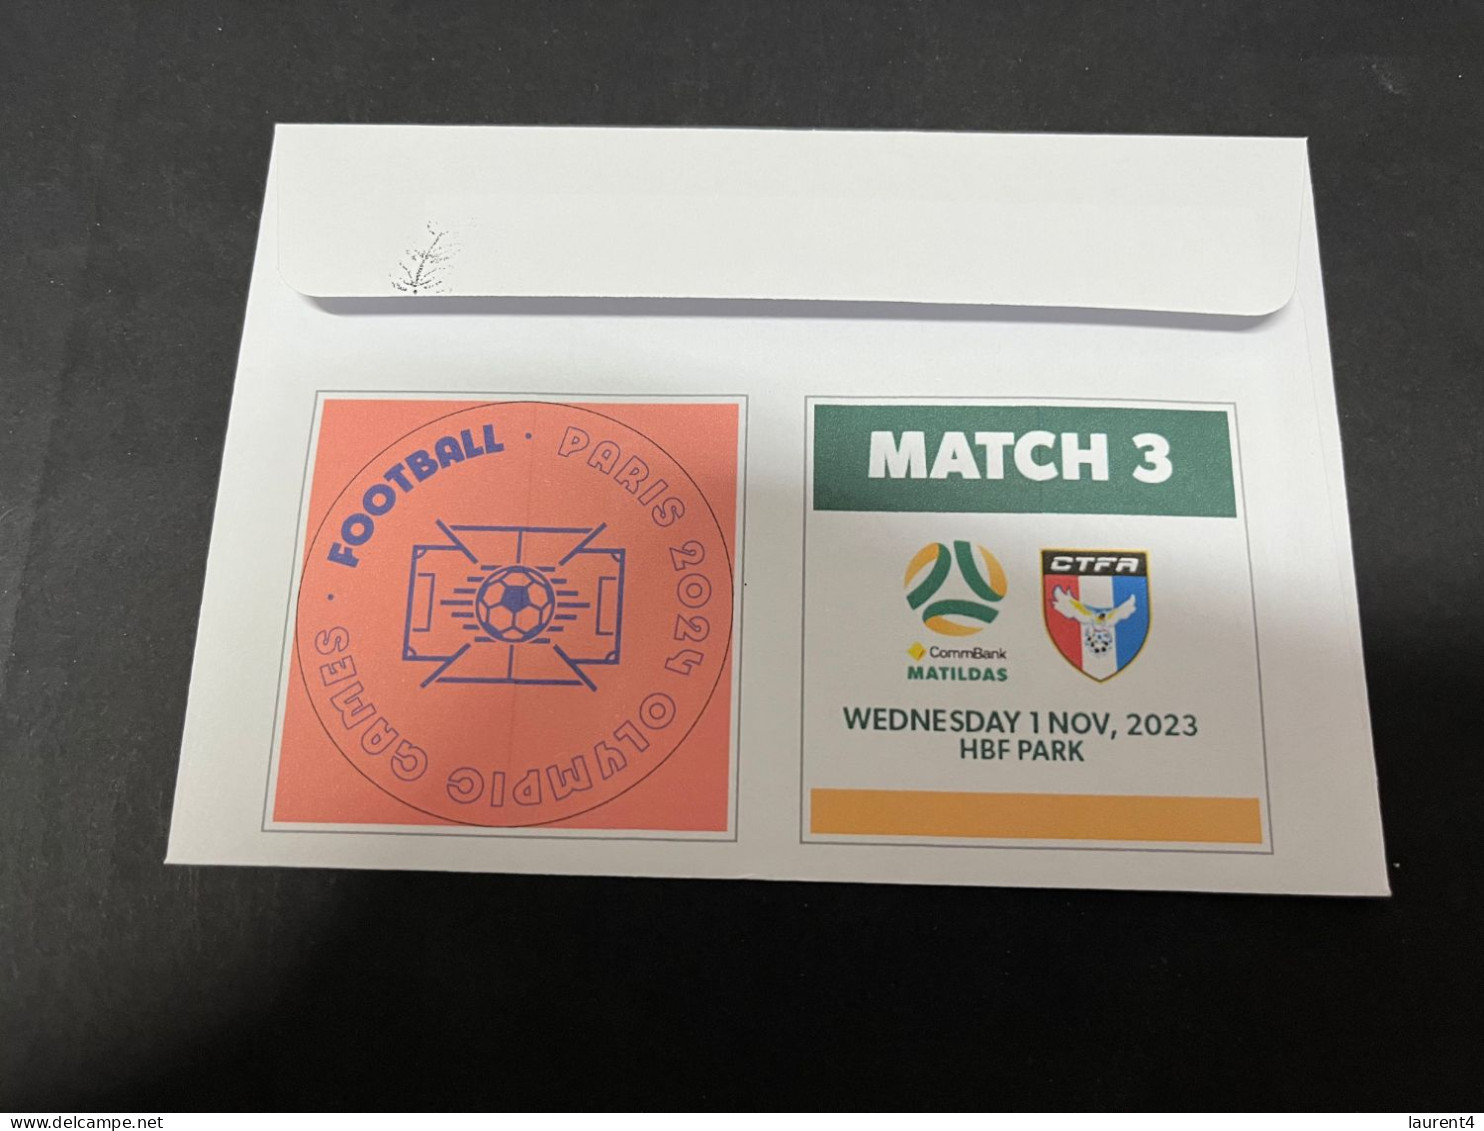 2-11-2023 (1 V 8) Australia (3) V Taiwan (0) - Matildas Olympic 2024 Qualifiers (match 3) 1-11-2023 In Perth - Zomer 2024: Parijs